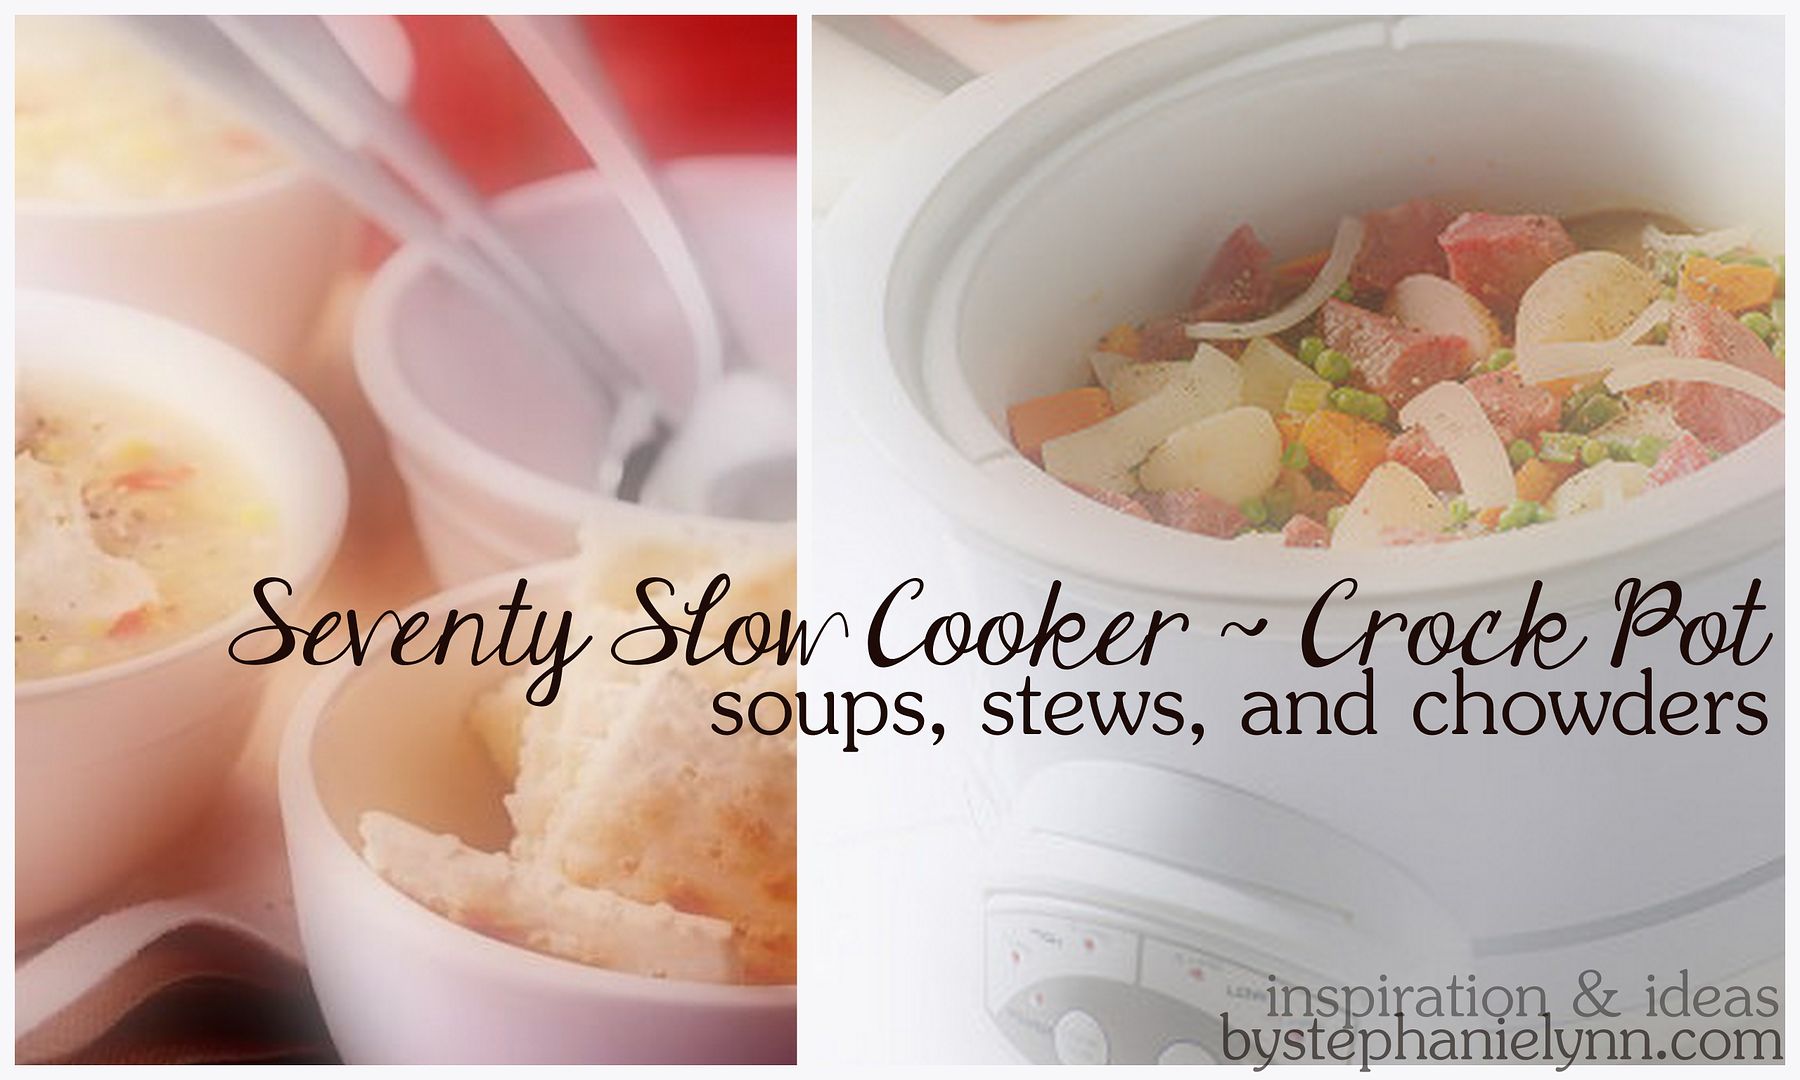 Seventy Crock Pot Soup Recipes: Slow Cooker Soup, Stew, and Chowder Ideas & Inspiration